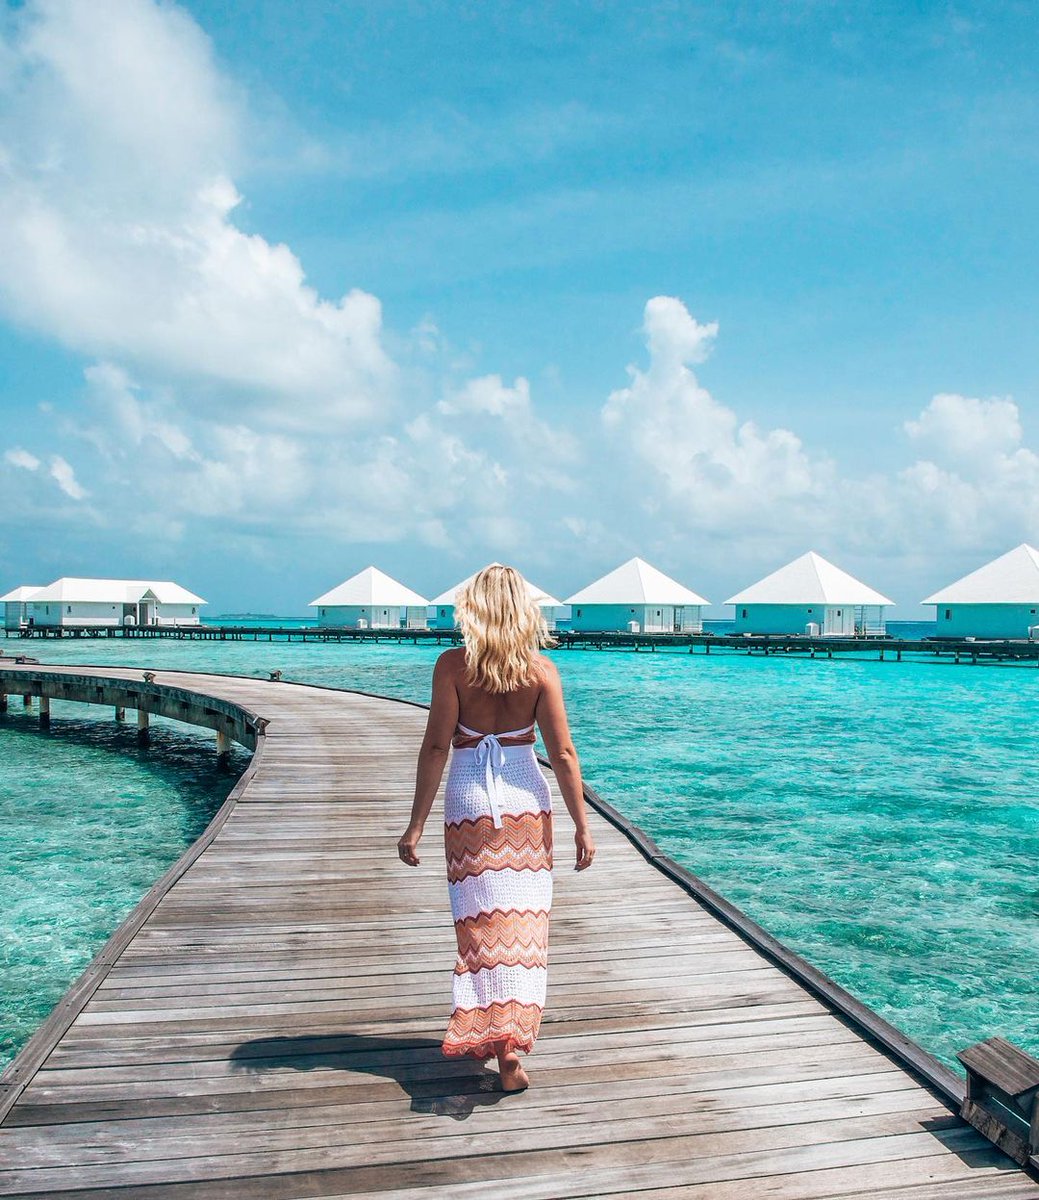 Living an island dream 🏝️💋💁🏼‍♀️

📍Maldives
📸 @gabidibbs via IG
#maldives #maldivesislands #maldivian #maldivesislands #island #dream #dreambig #dreamlife #life #lifegoals #goals #paradise #paradisebeach #paradiseonearth #earth #world #travel #travelblog #travelblogger #travelling